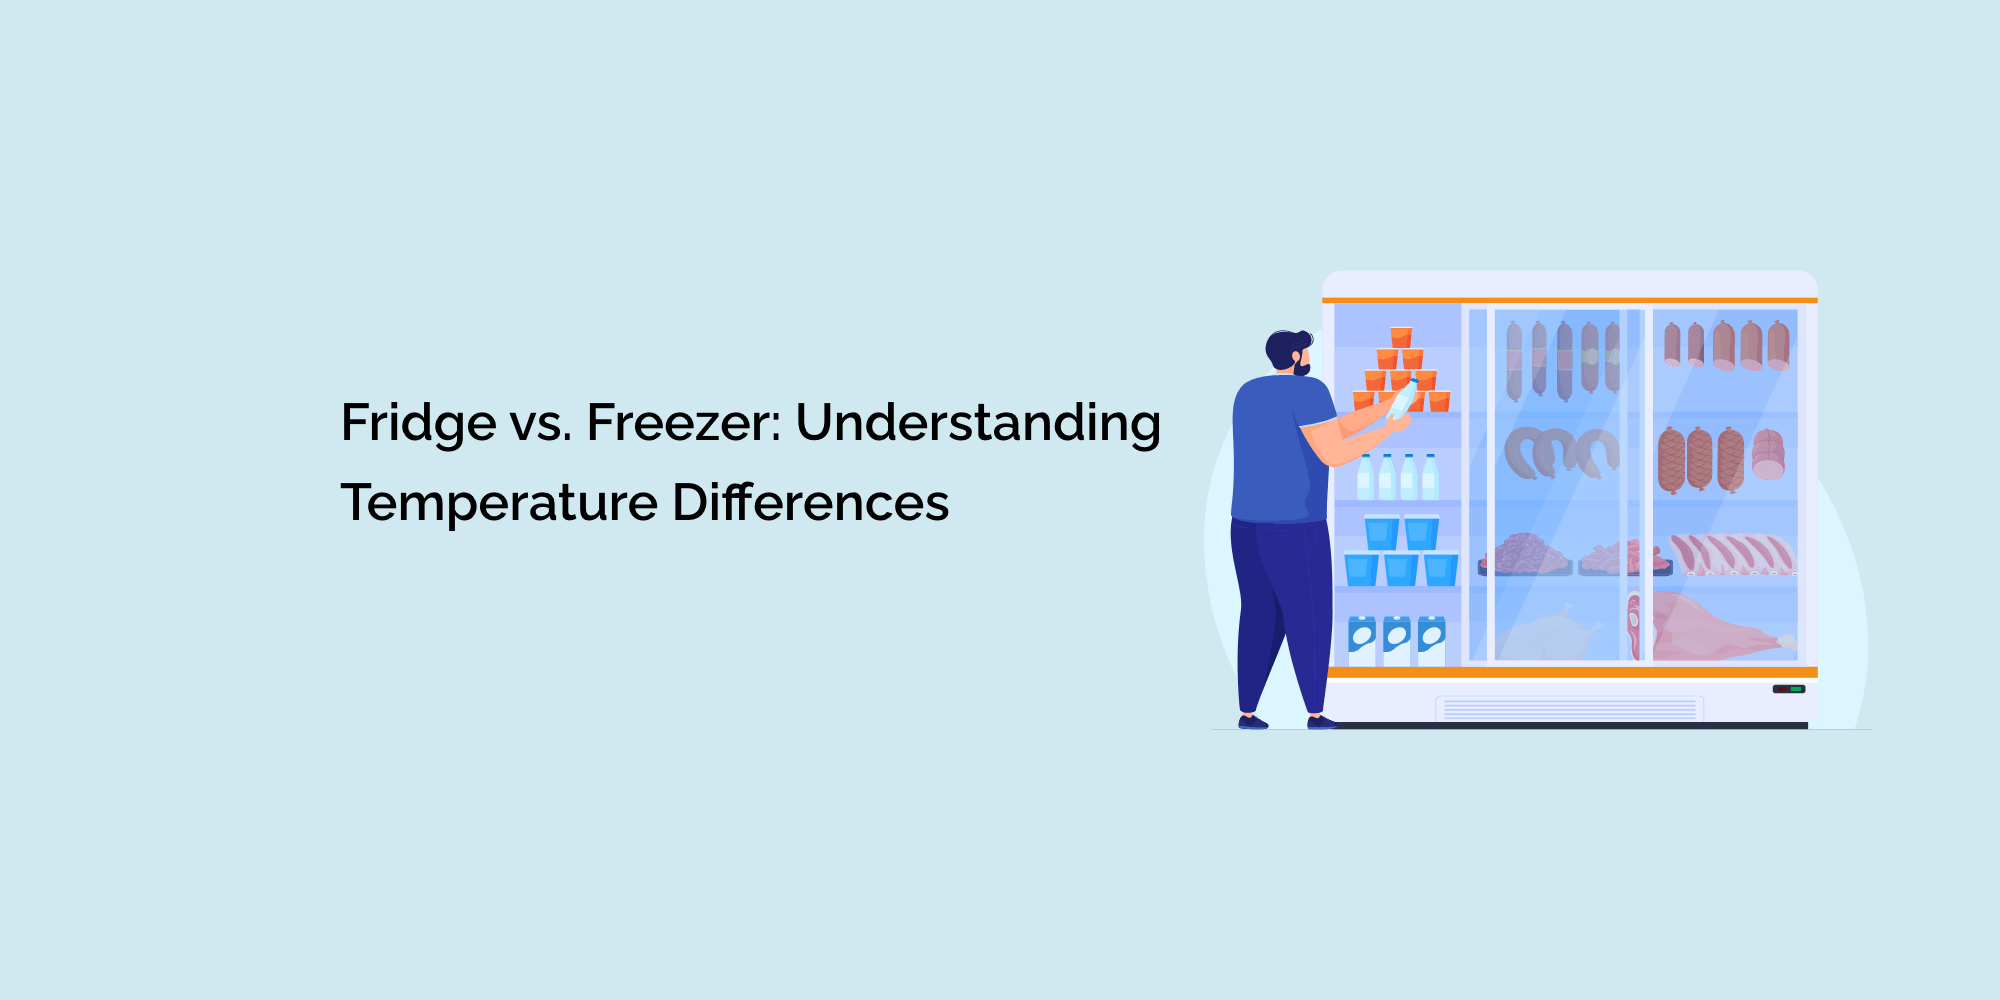 Fridge vs. Freezer: Understanding Temperature Differences